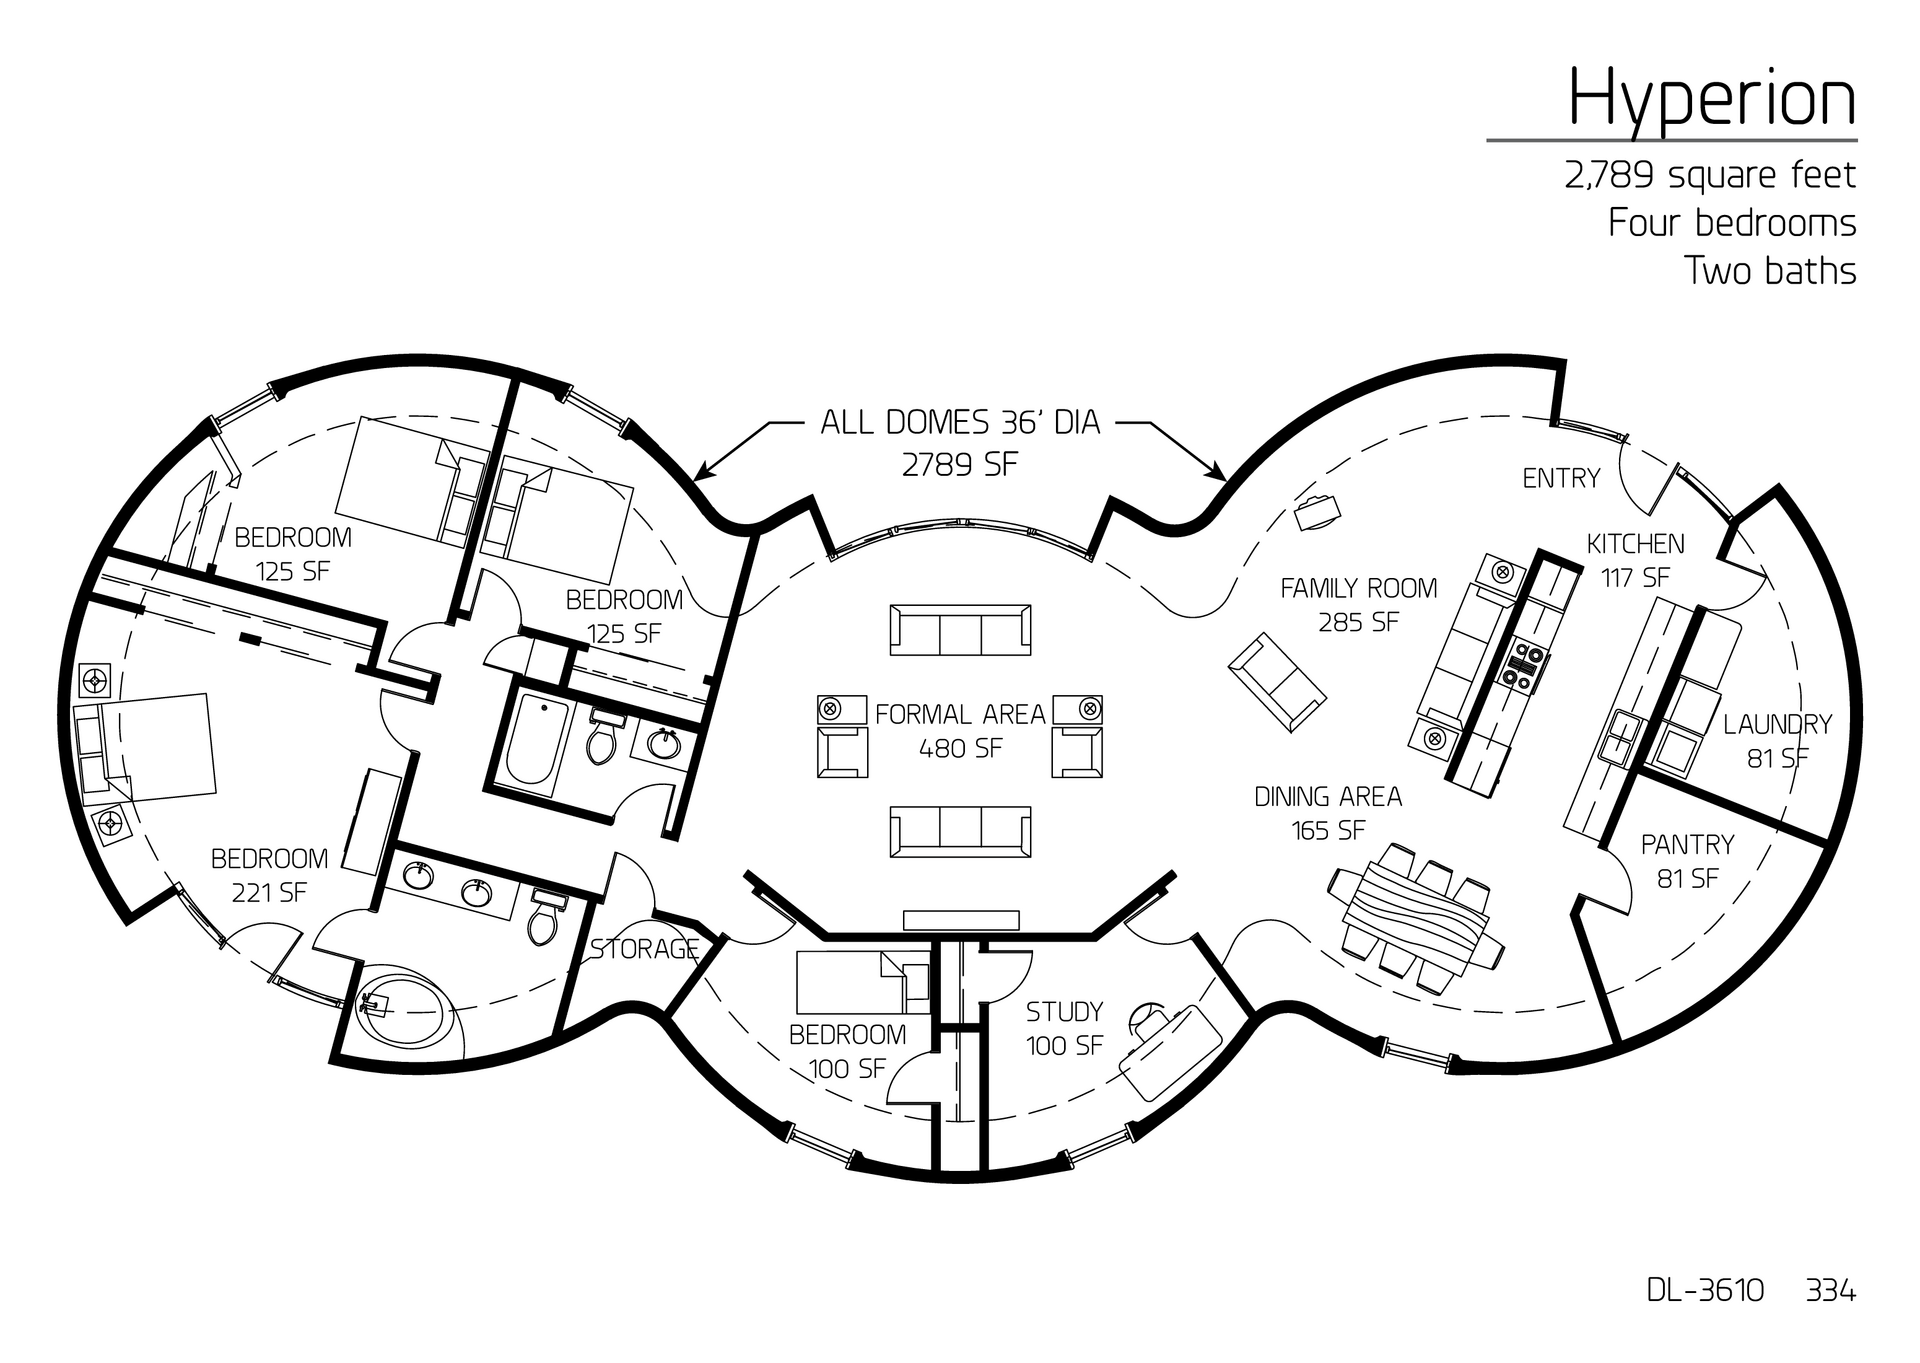 Hyperion: Three 36' Diameter Domes, 2,789 SF, Four-Bedroom, Two-Bath Floor Plan.